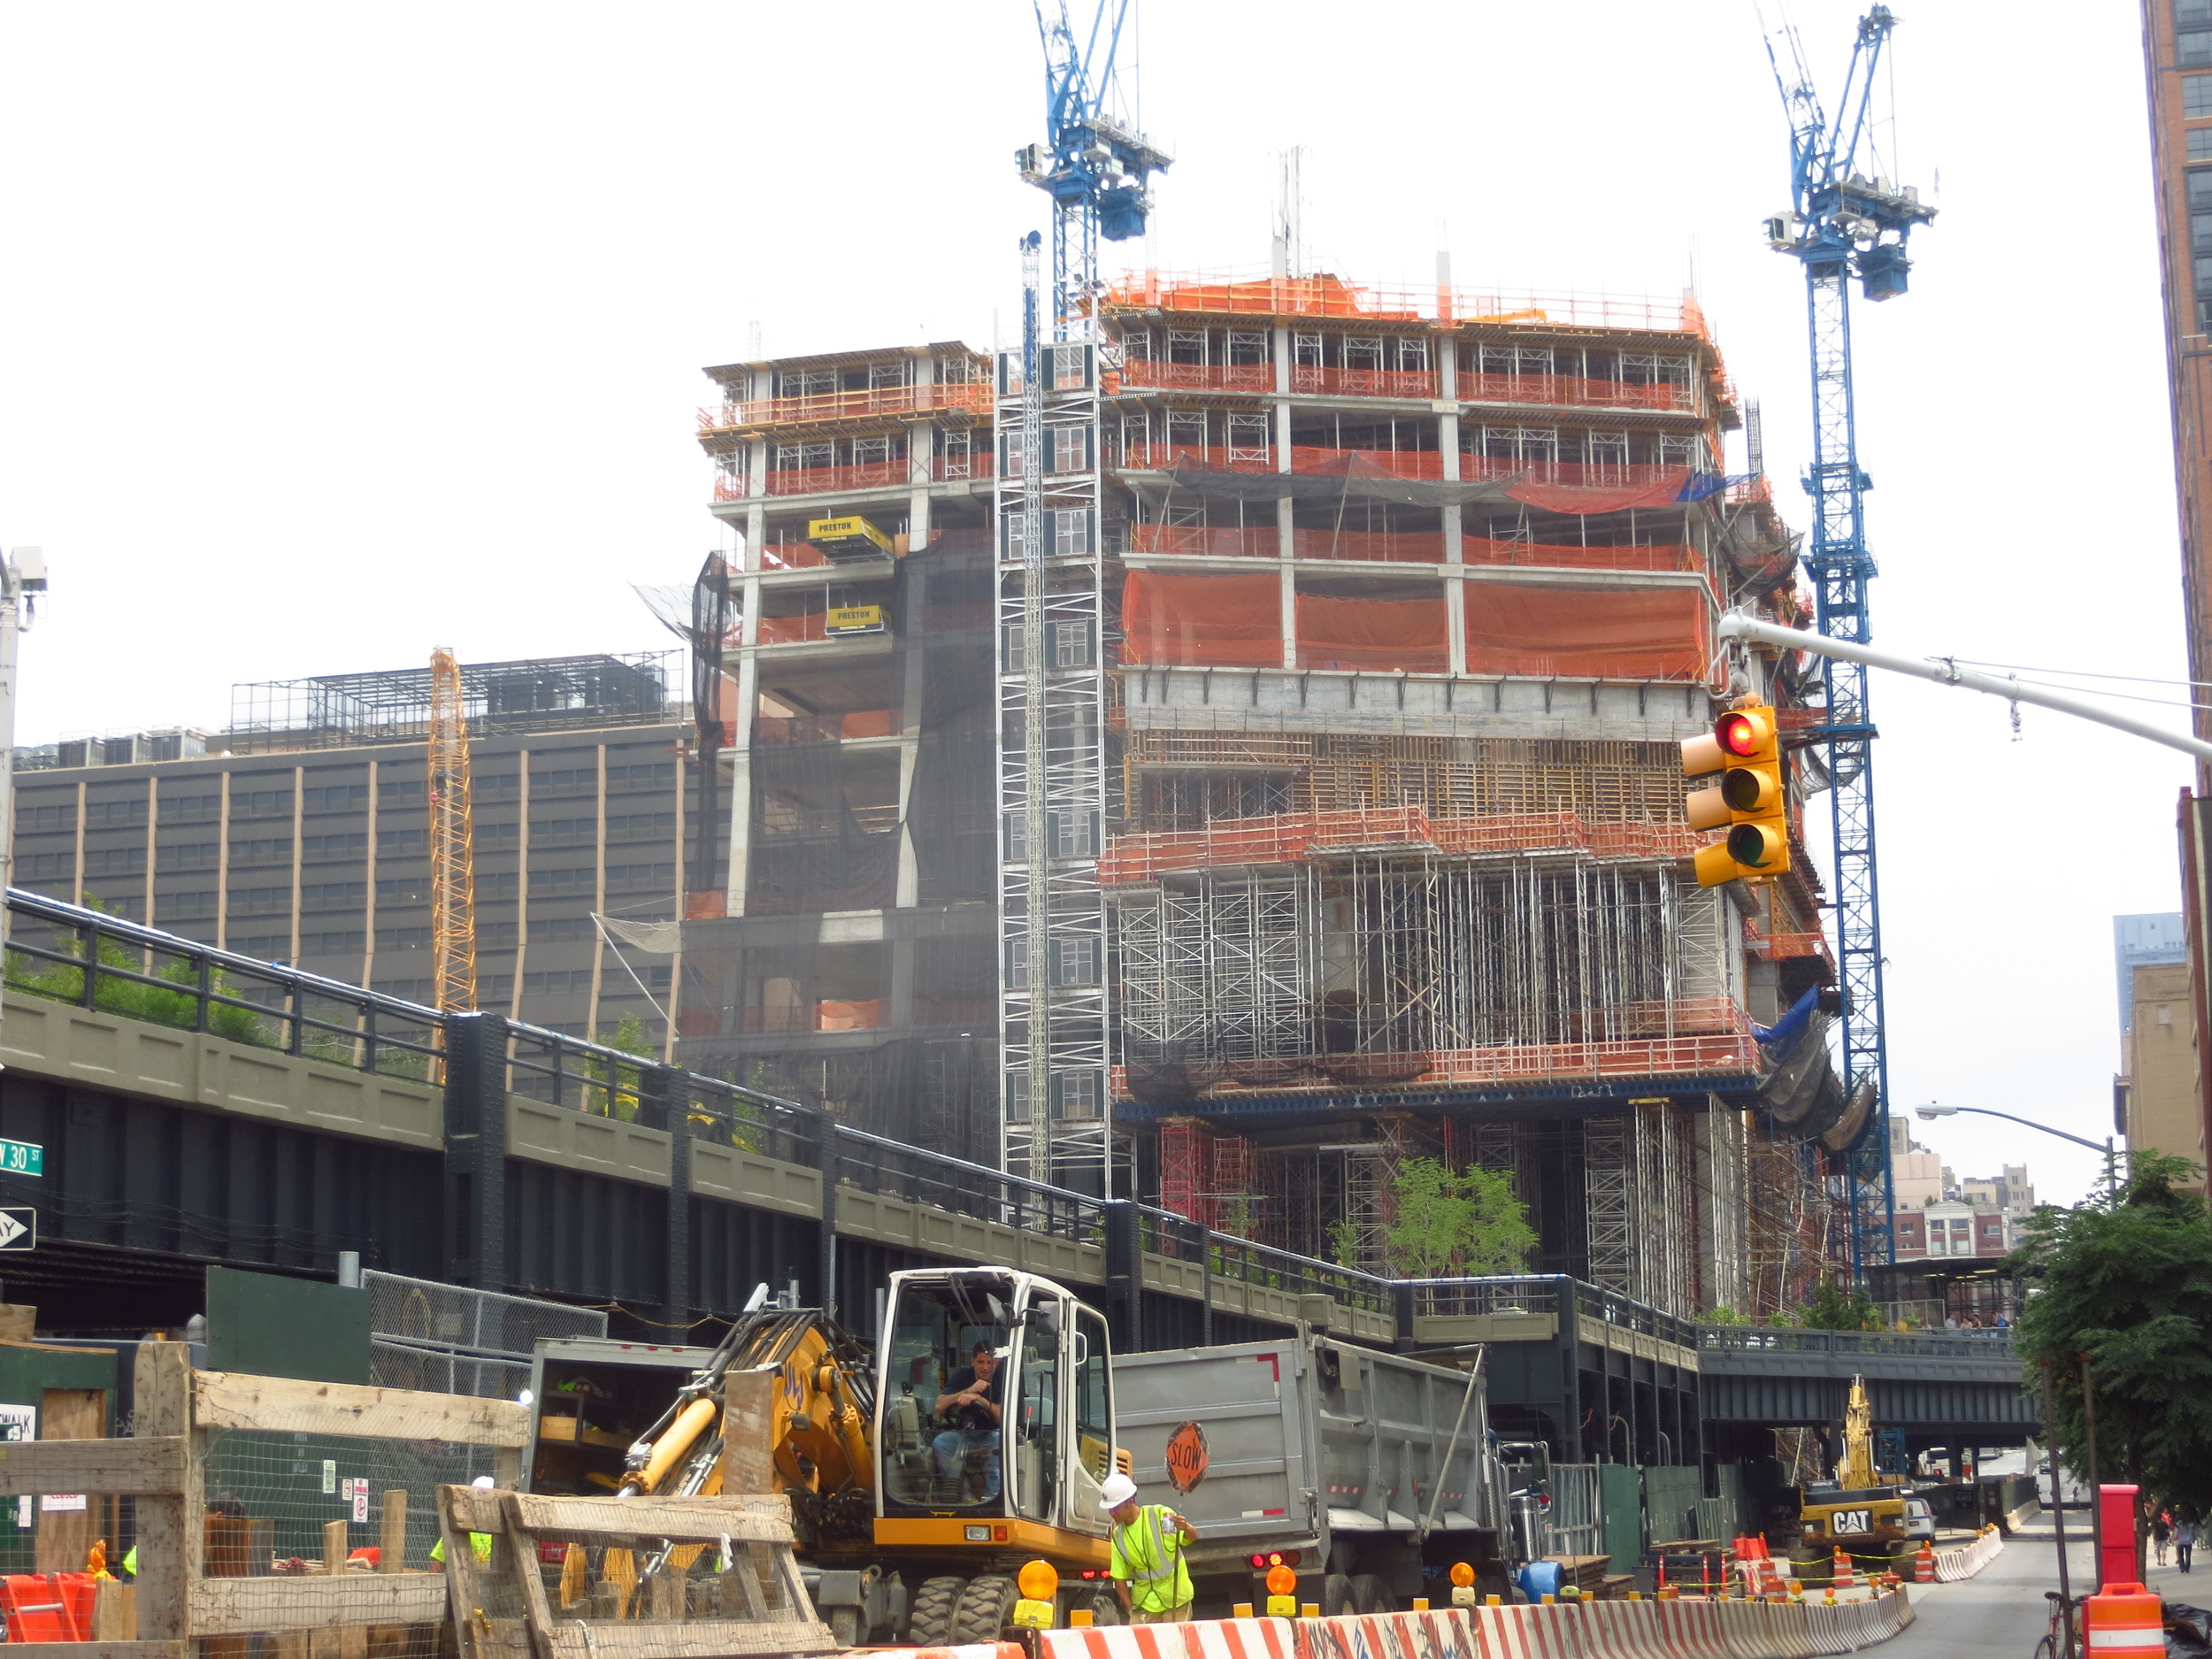 New Highline Park section under construction